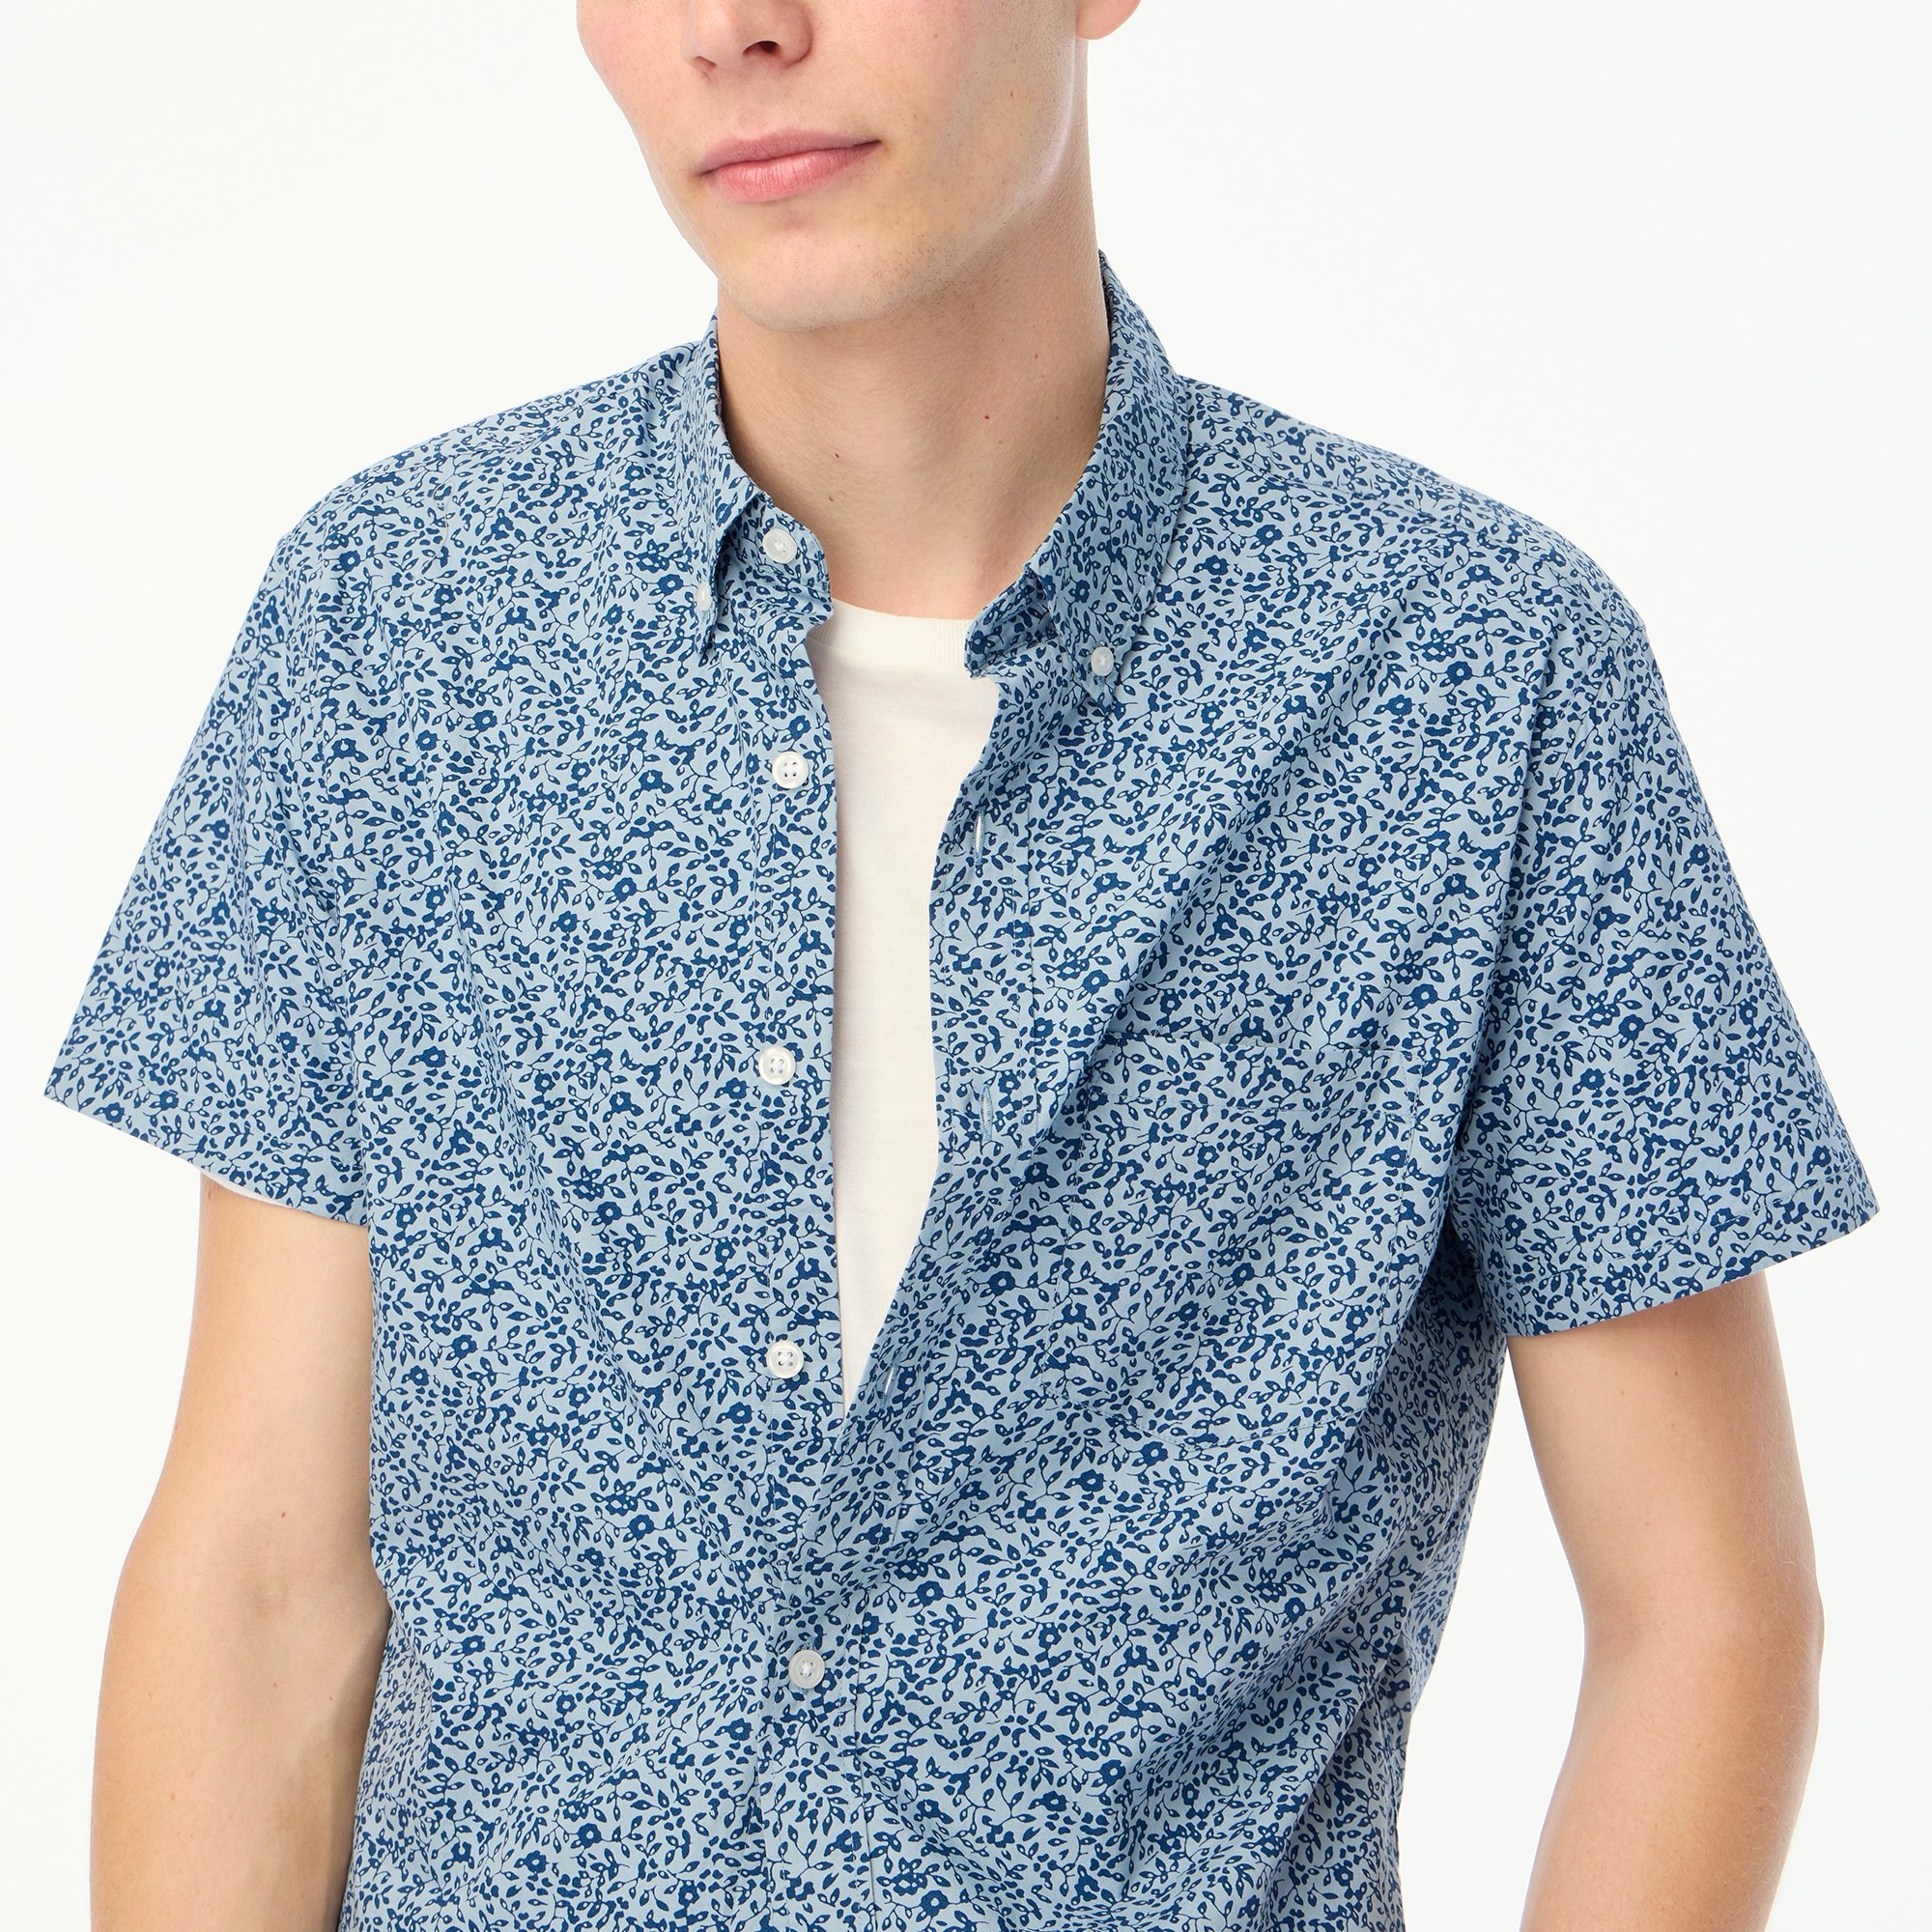 Slim short-sleeve printed flex casual shirt